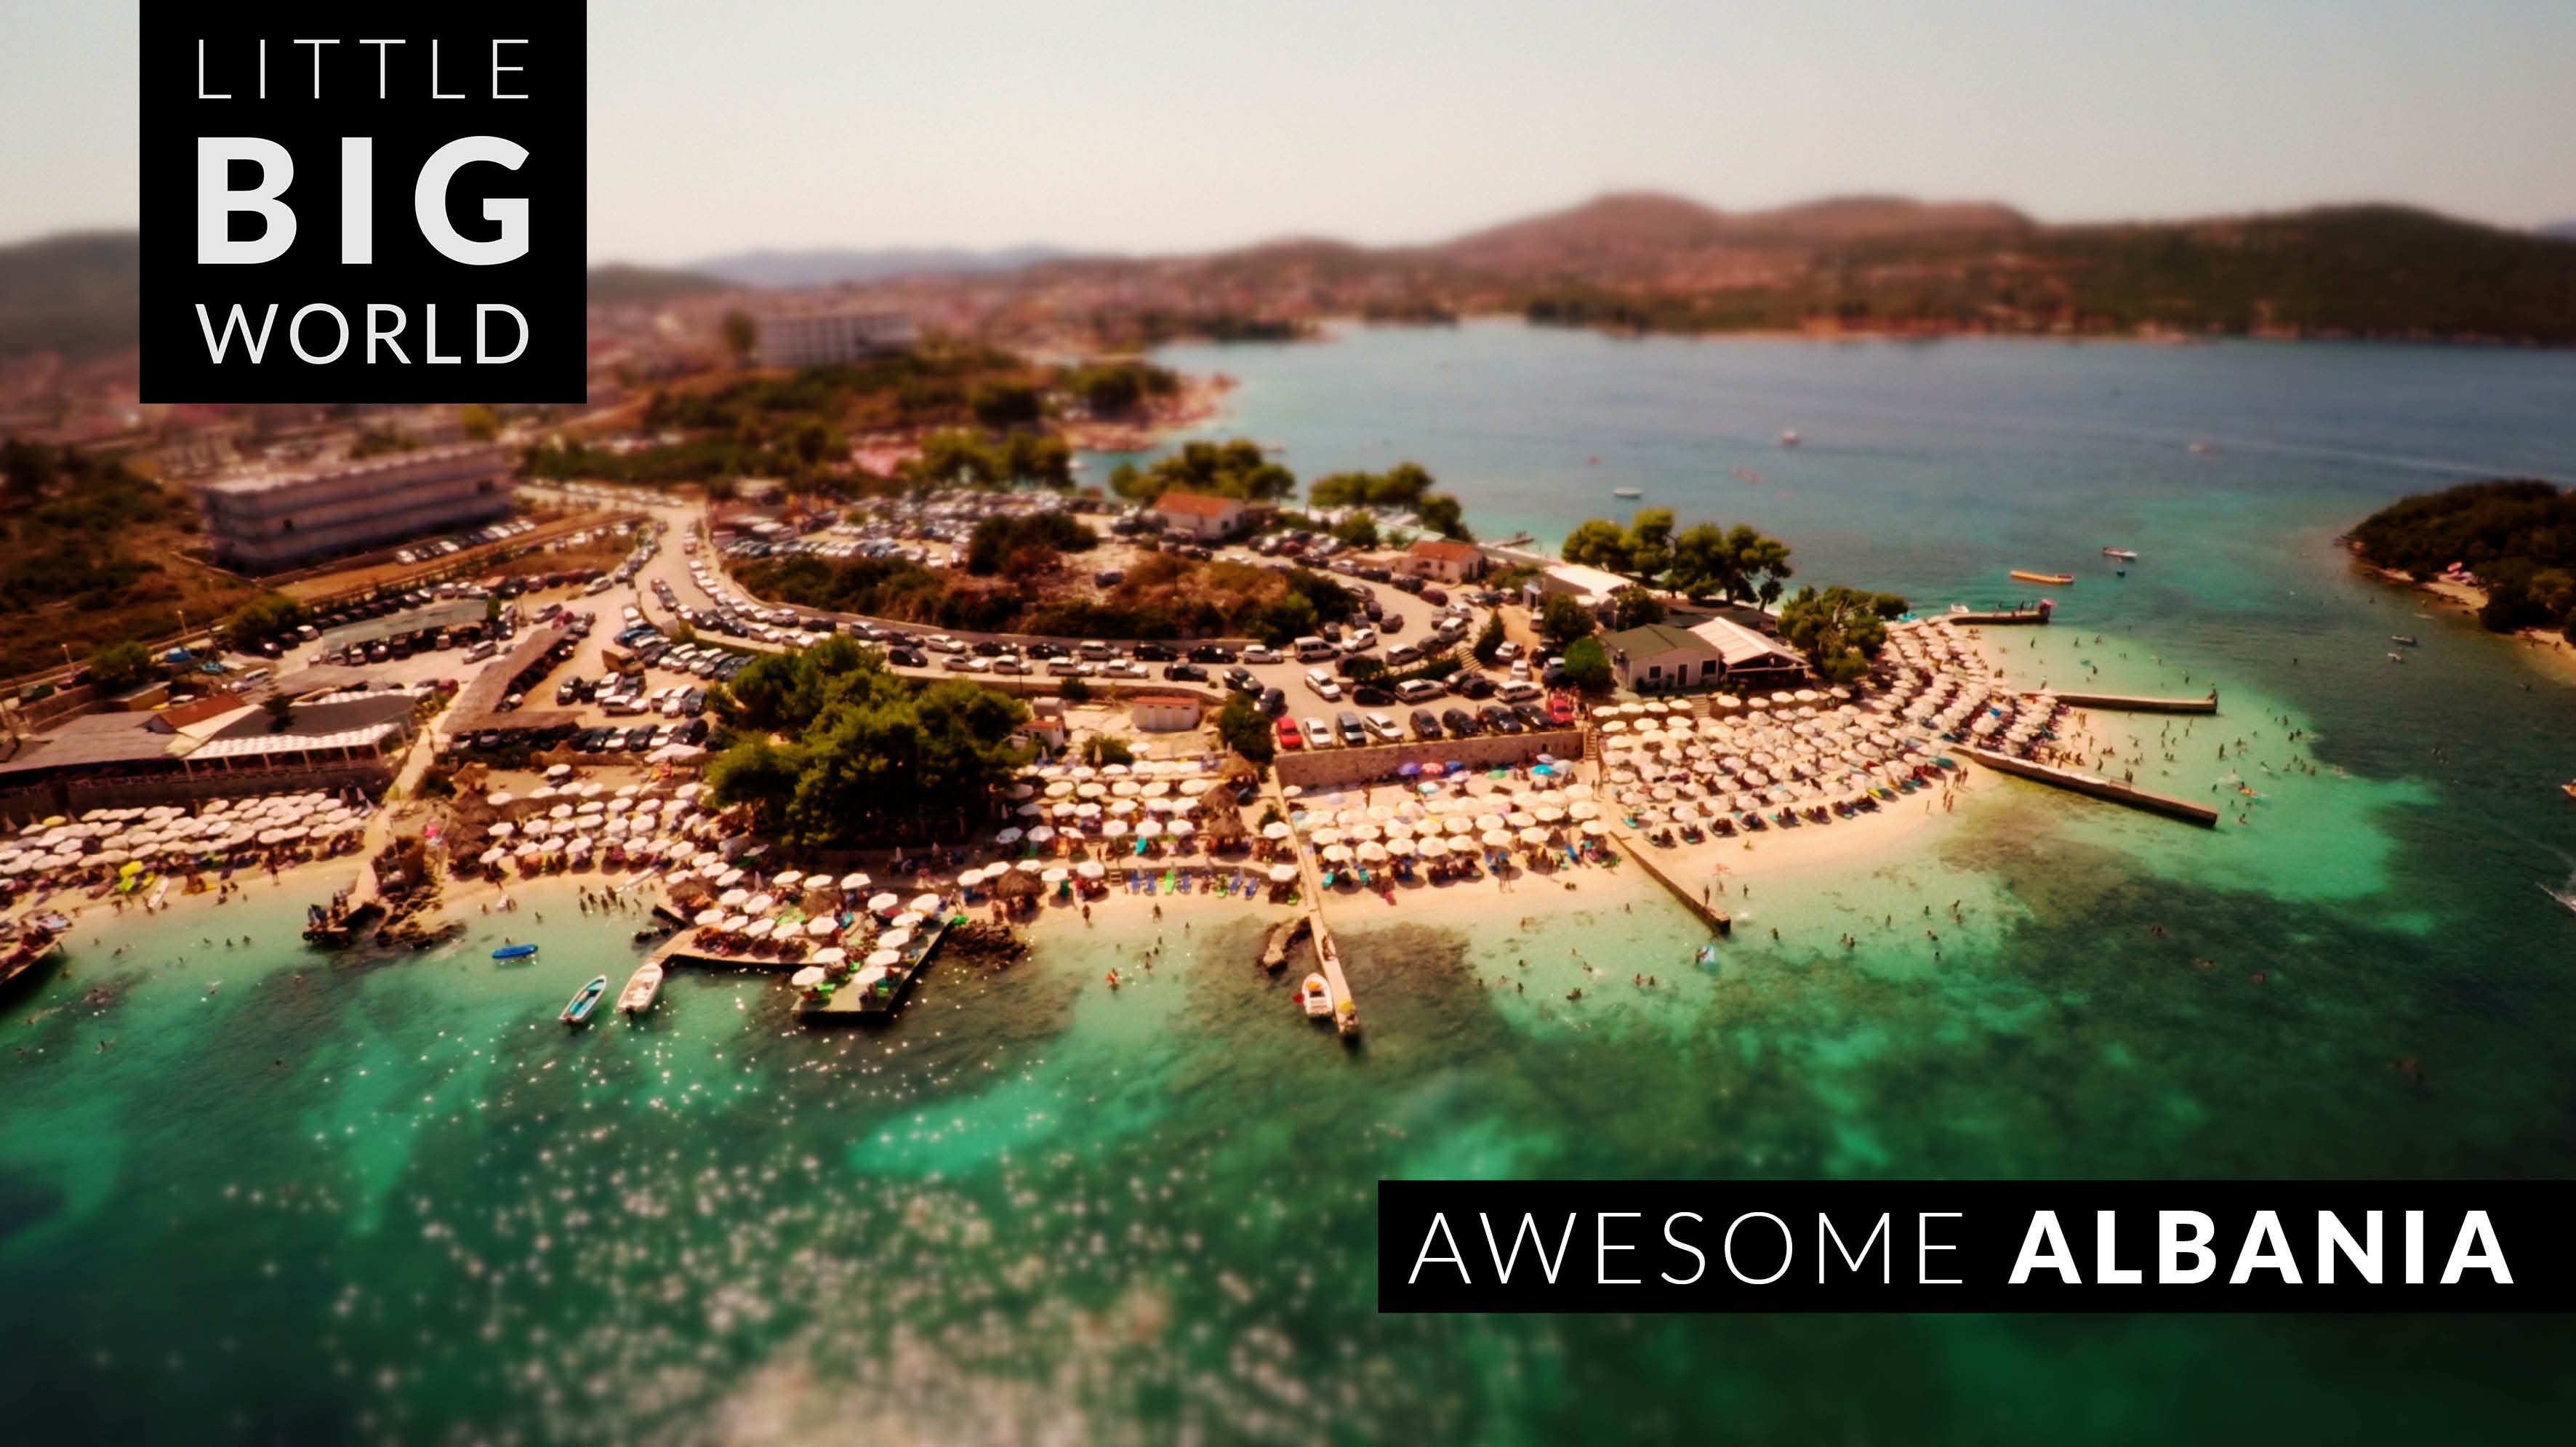 Awesome Albania (4k - Time Lapse - Aerial - Tilt- Shift) - YouTube